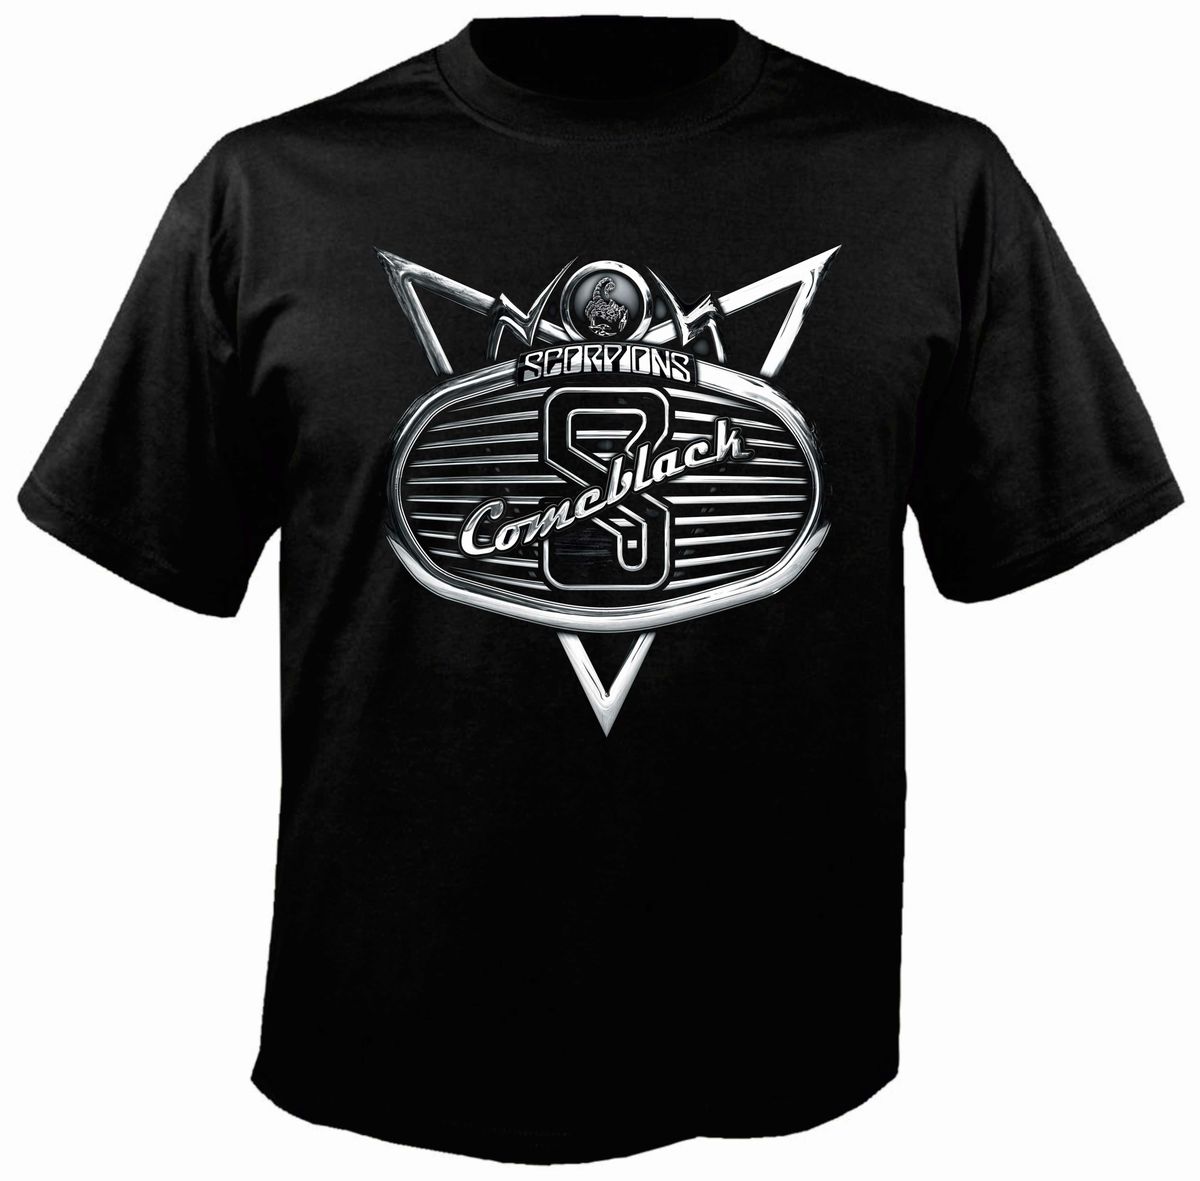 Scorpions Comeblack T-Shirt – Metal & Rock T-shirts and Accessories